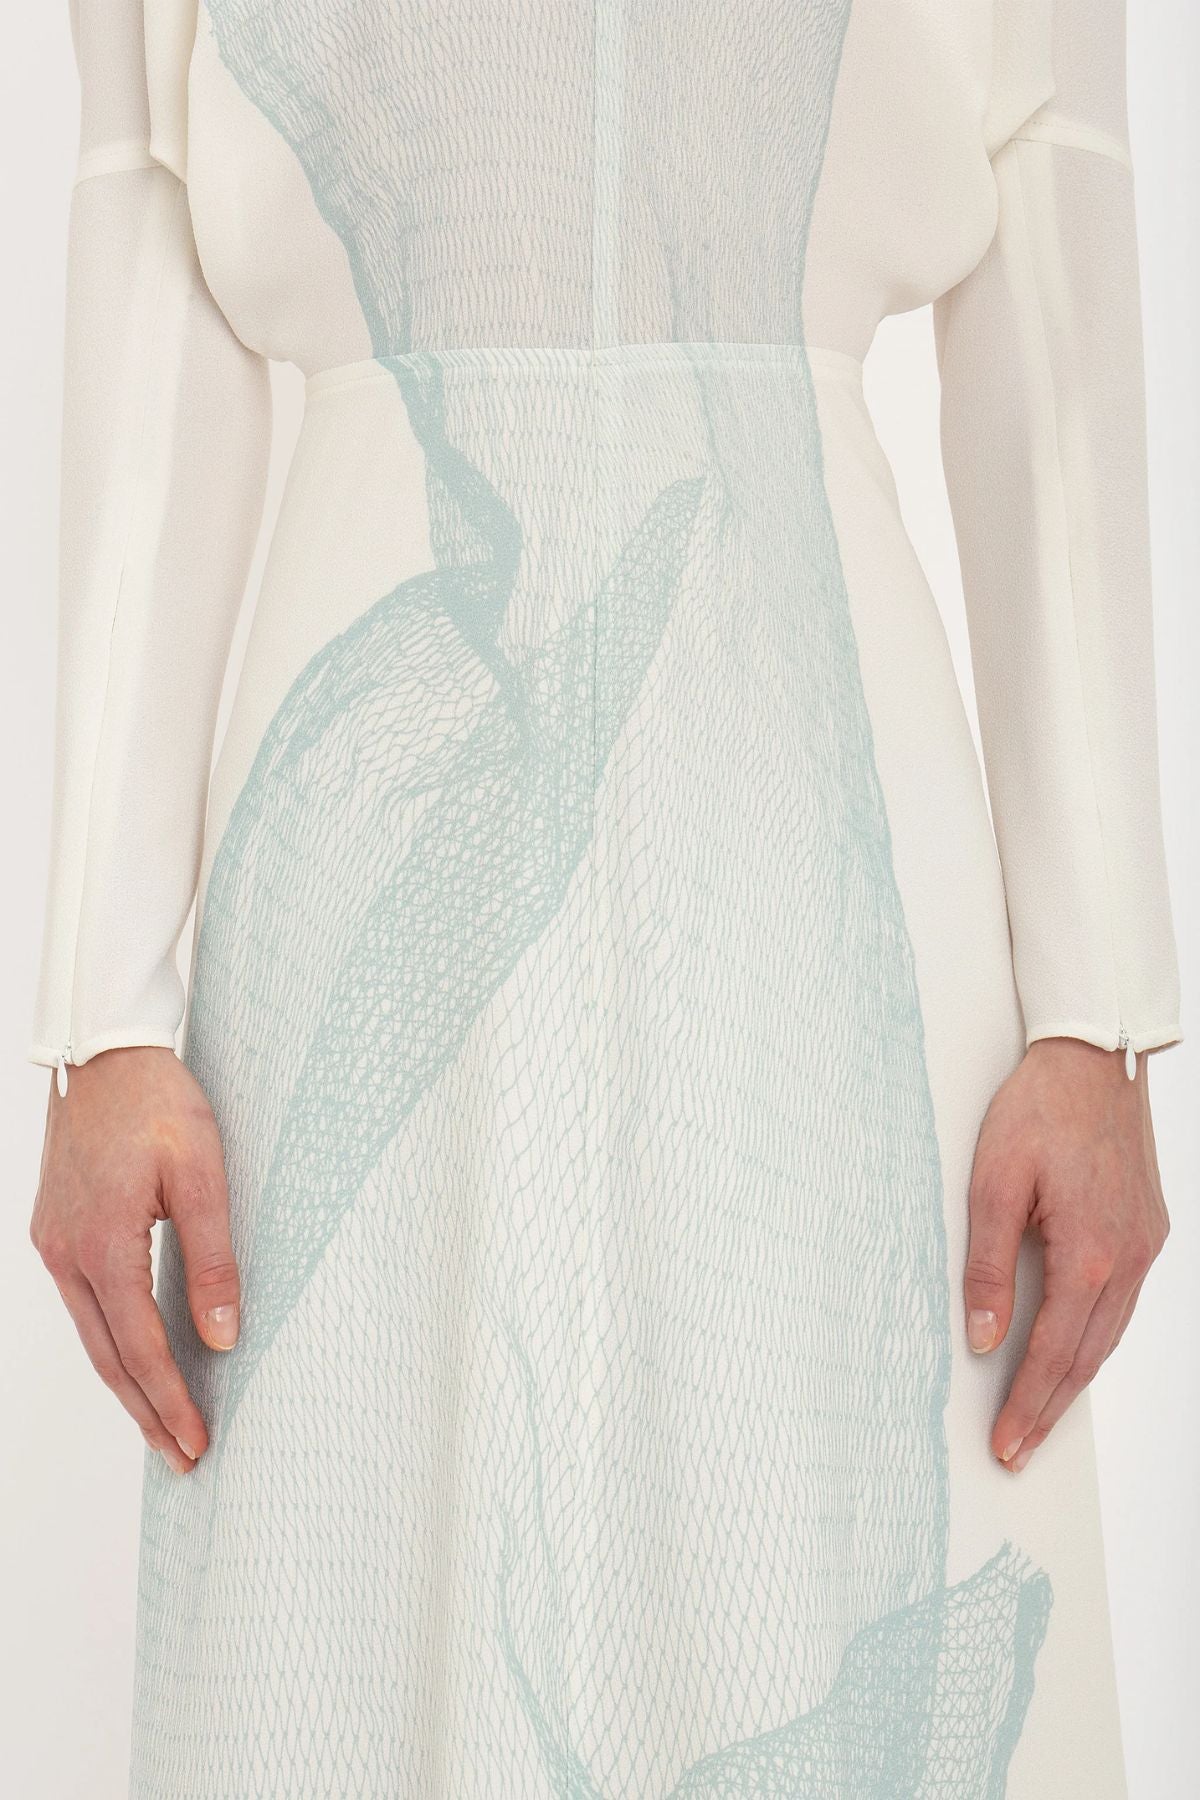 Victoria Beckham Long Sleeve Dolman Midi Dress - White/ Viper Blue